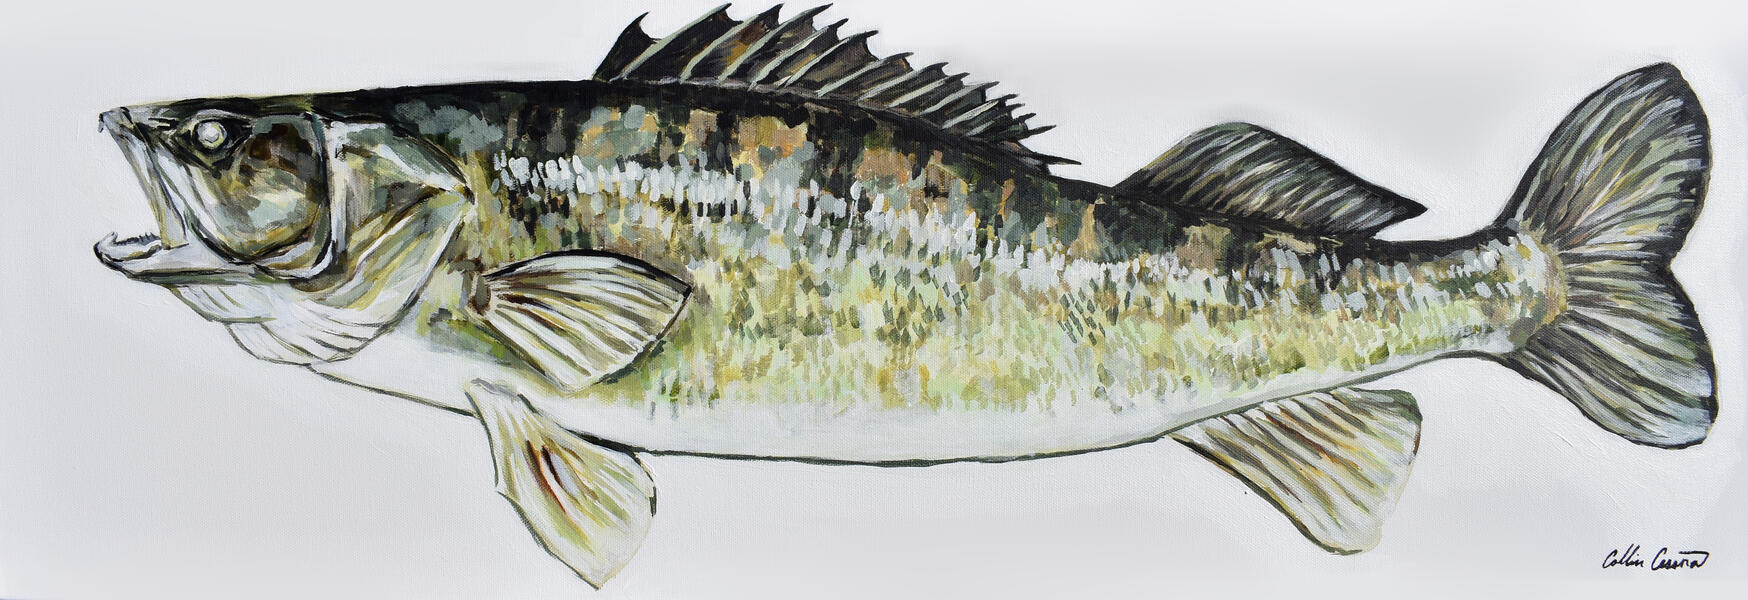 Walleye Fish by Collin Cessna